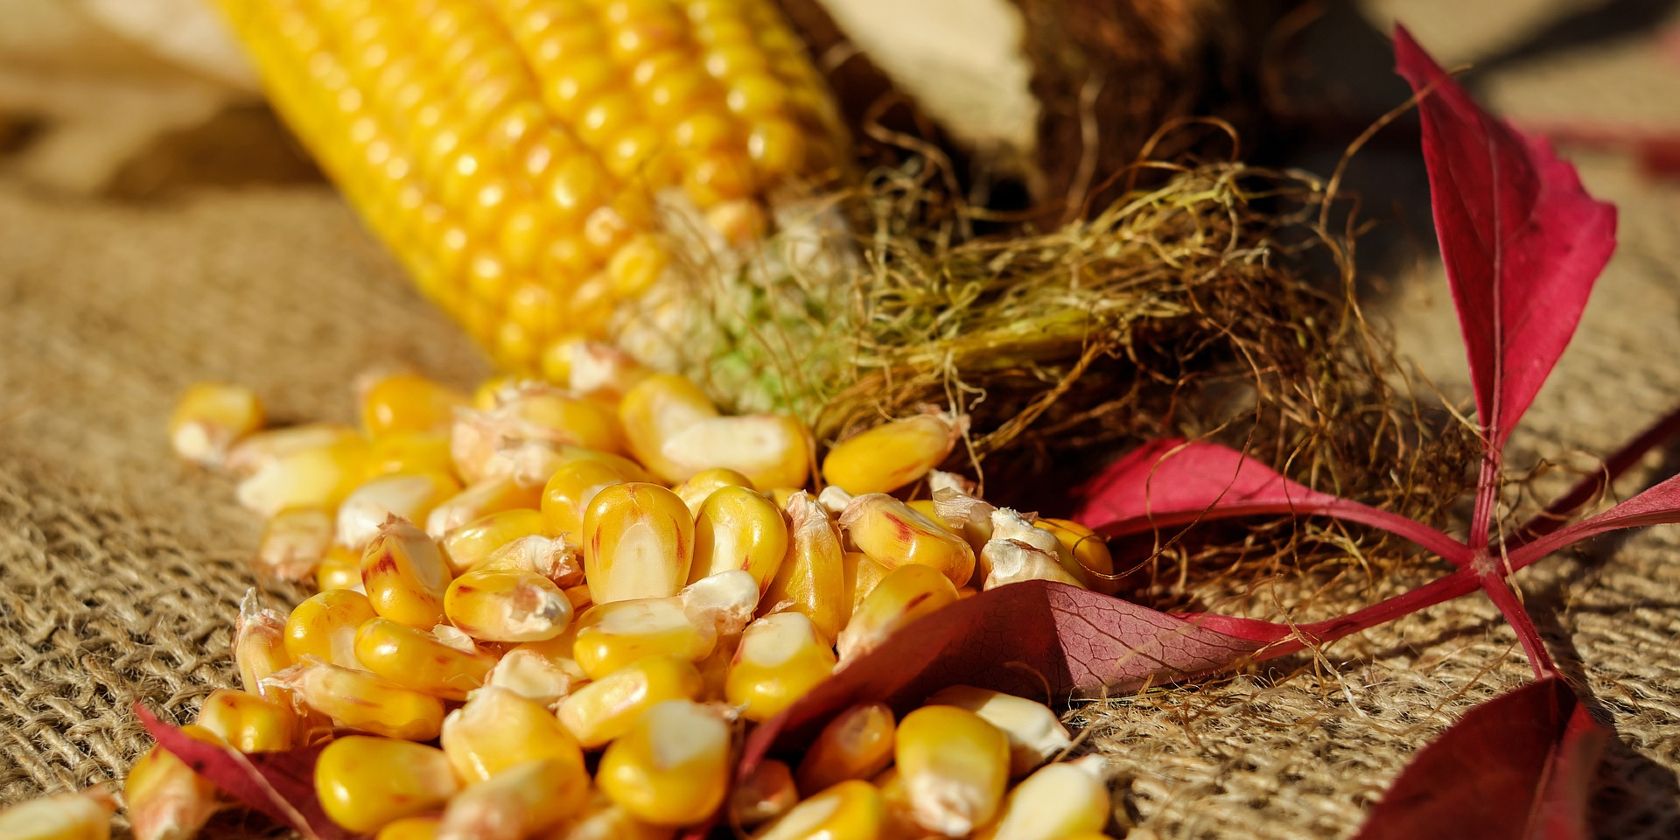 Corn kernels and corn on the cob